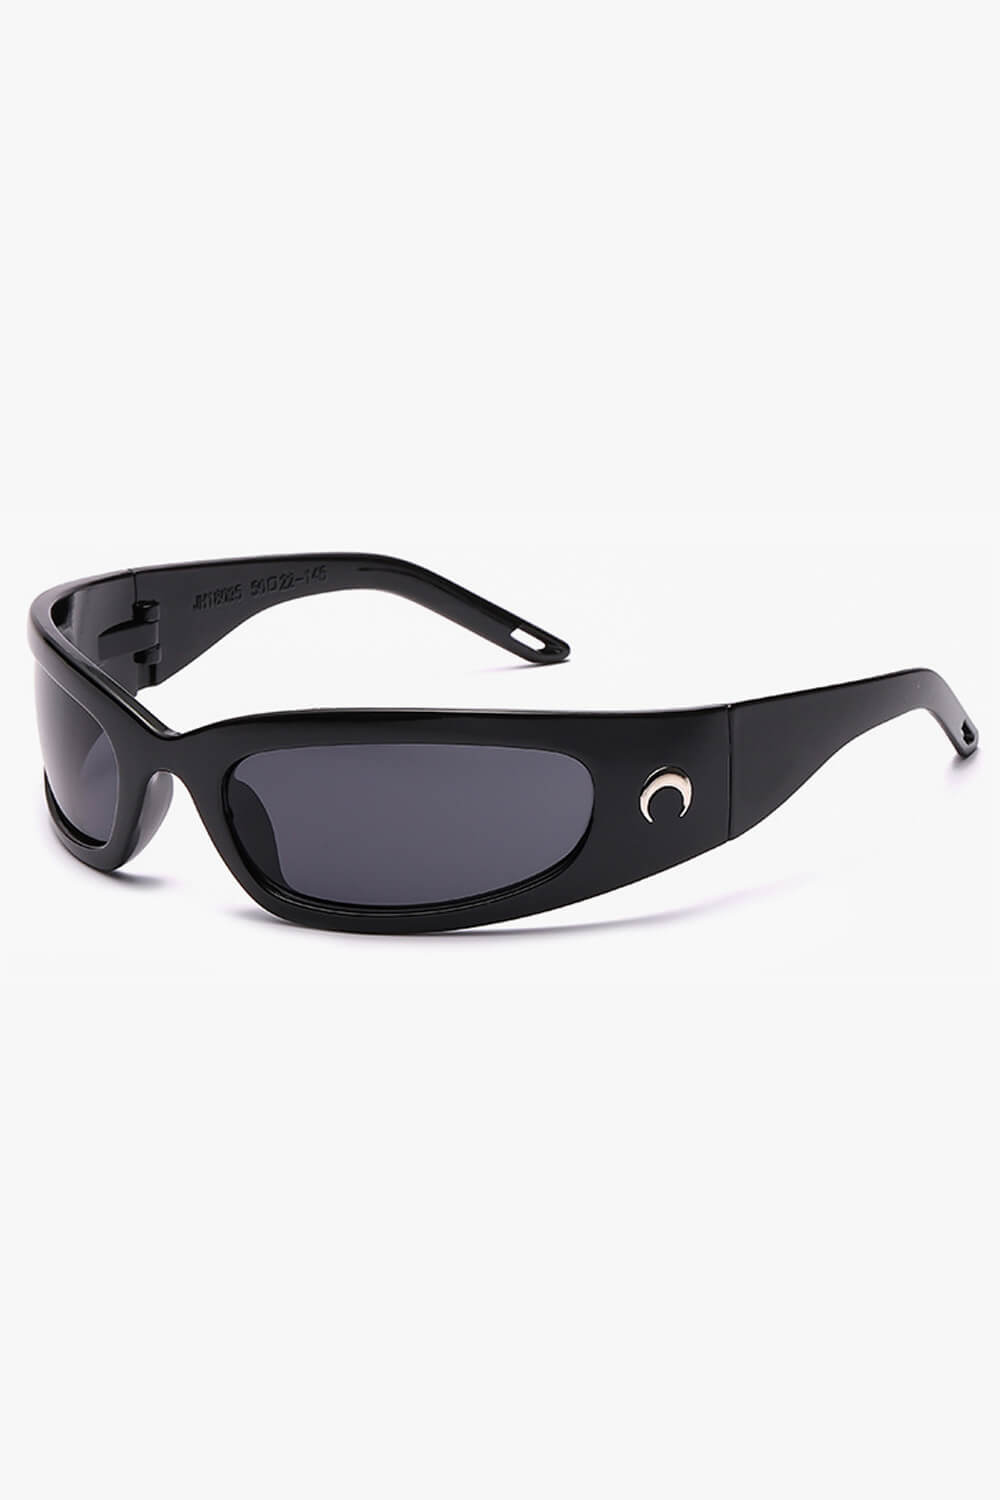 Crescent Moon Rectangular Aesthetic Sunglasses